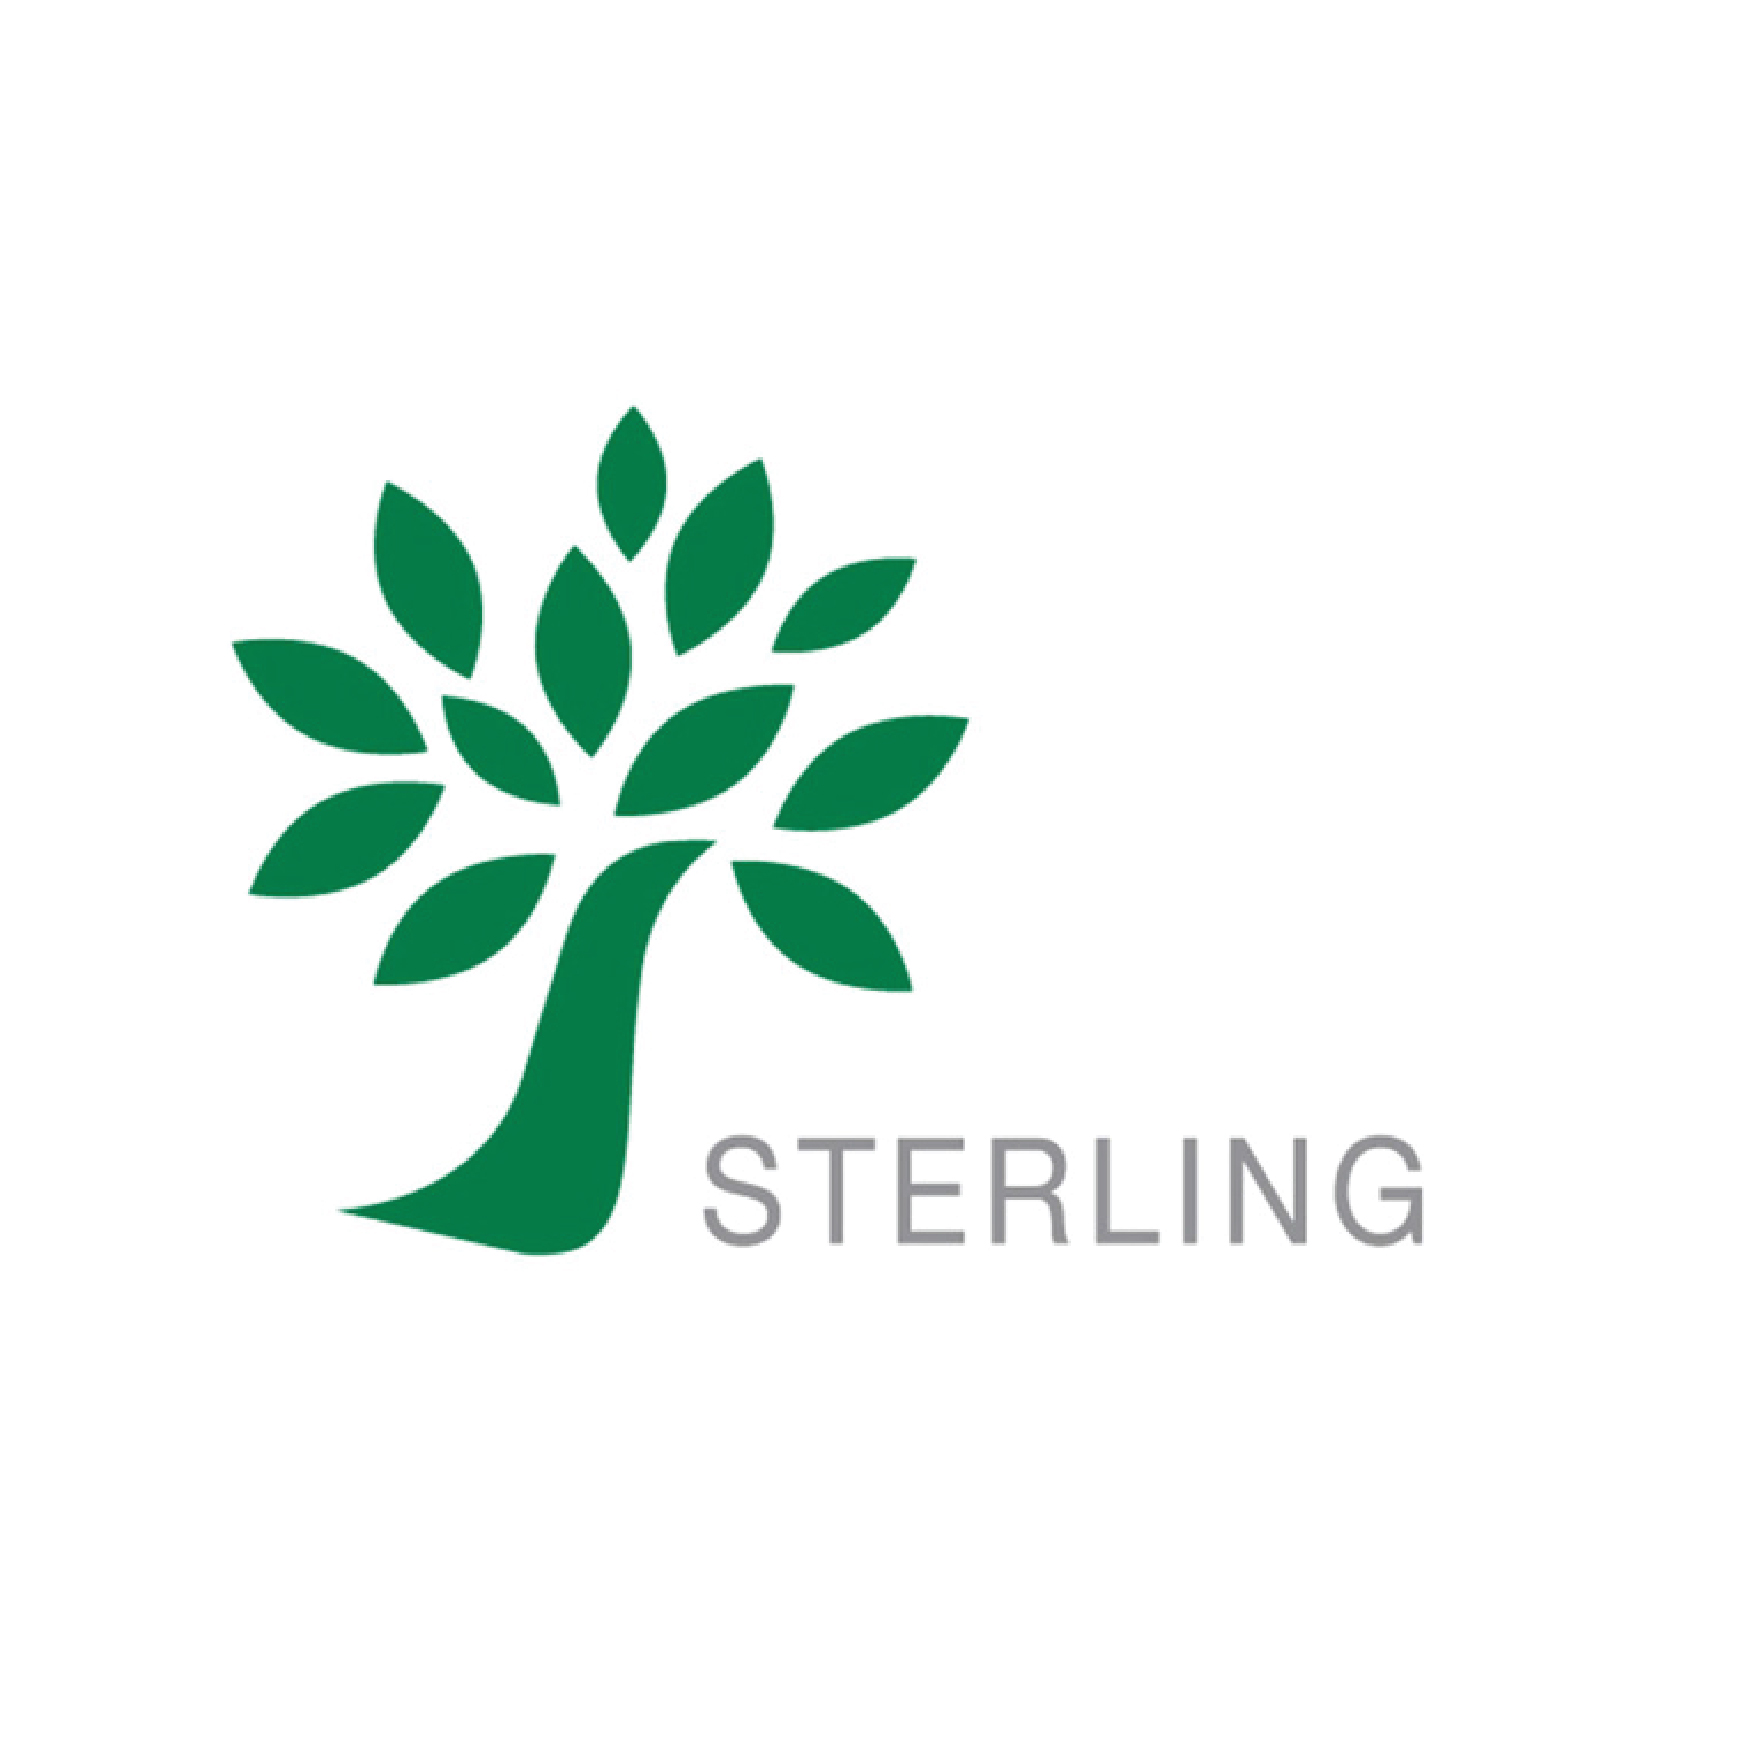 sterling-01.jpg